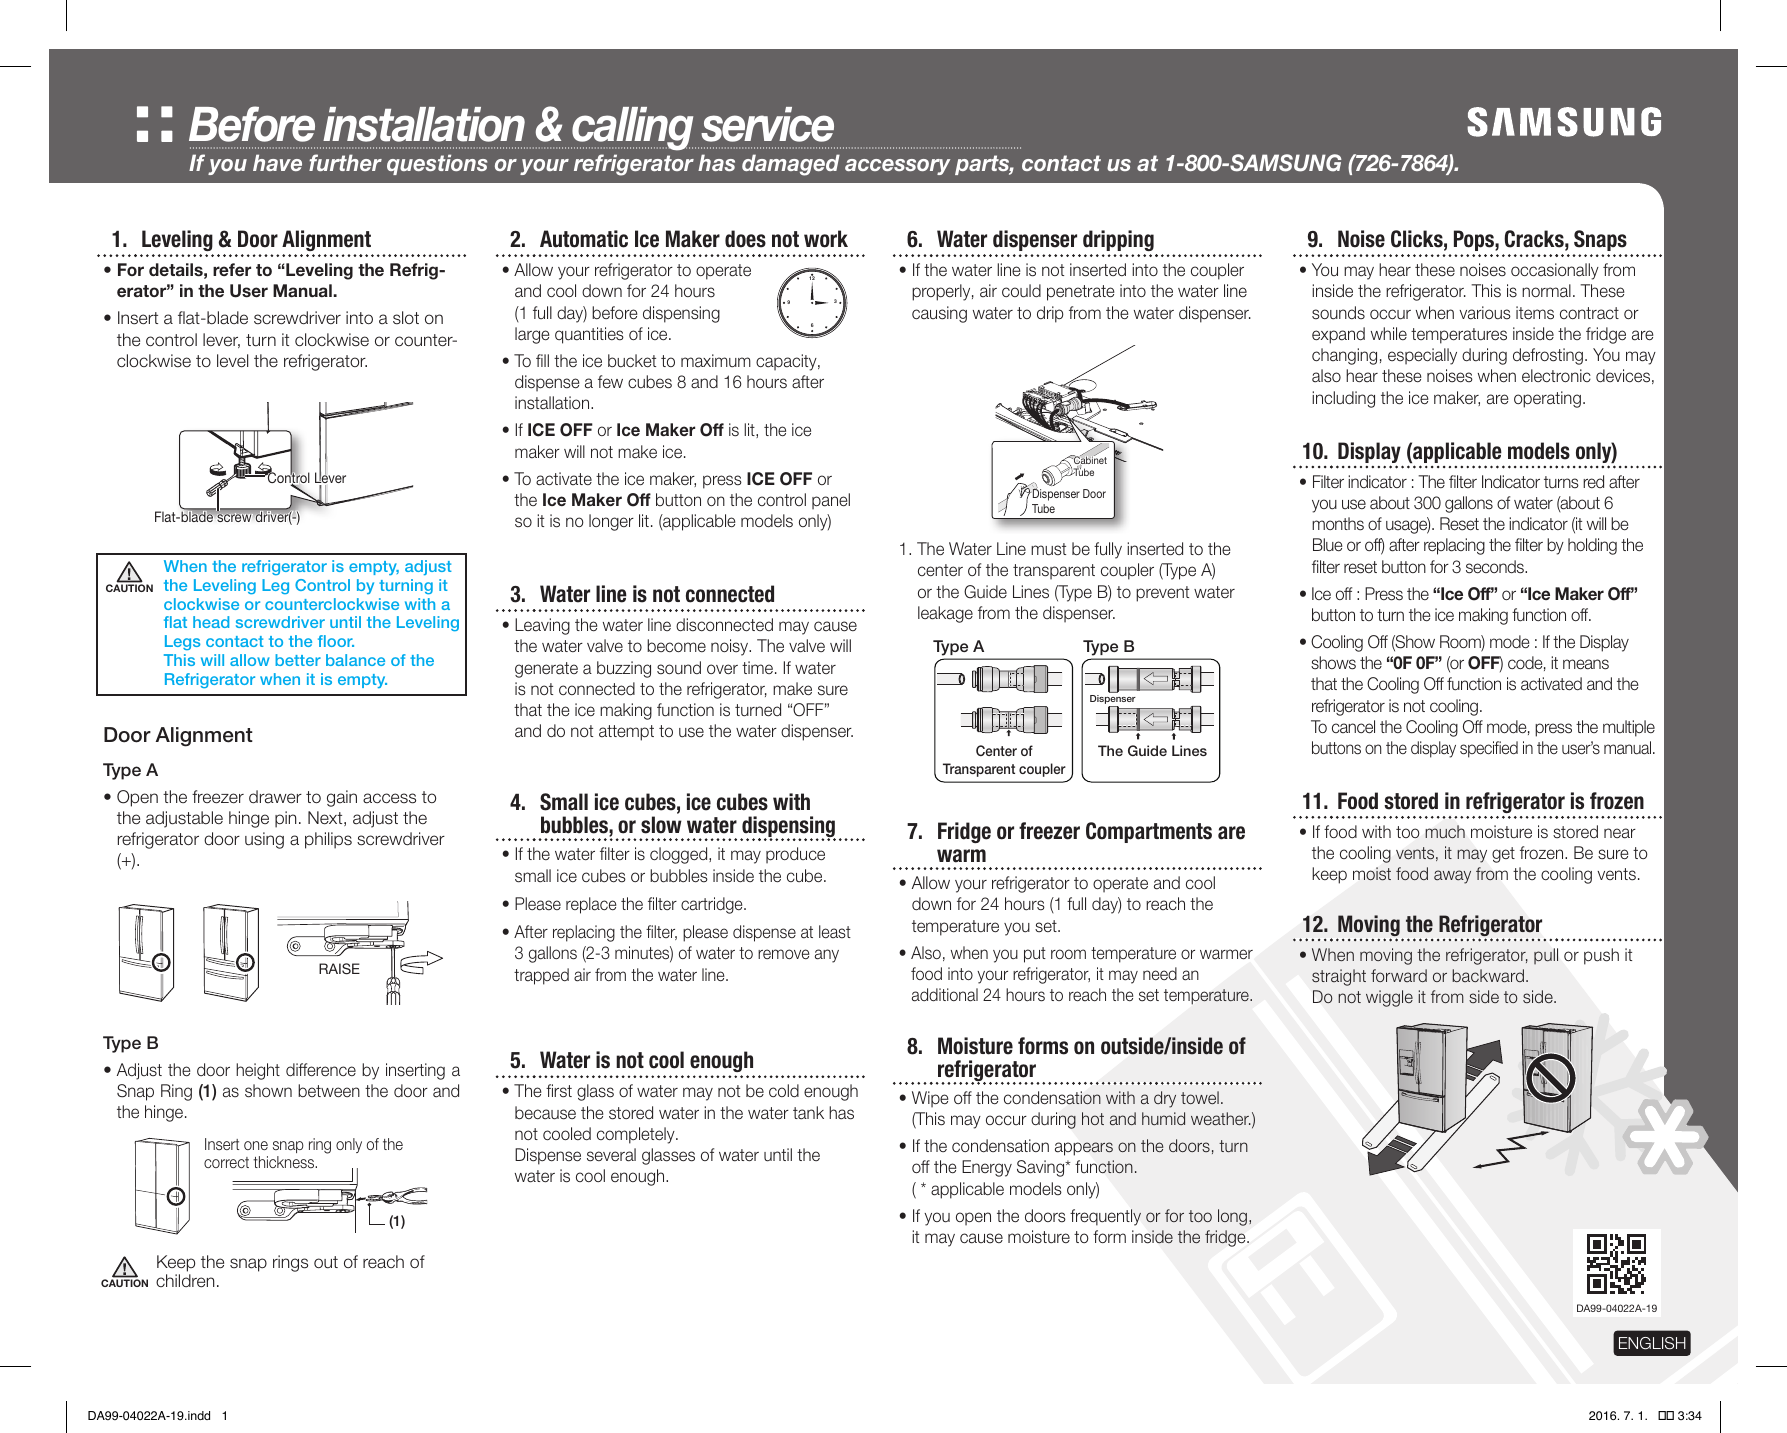 Page 1 of 2 - Samsung  Manual DA99-04022A-19